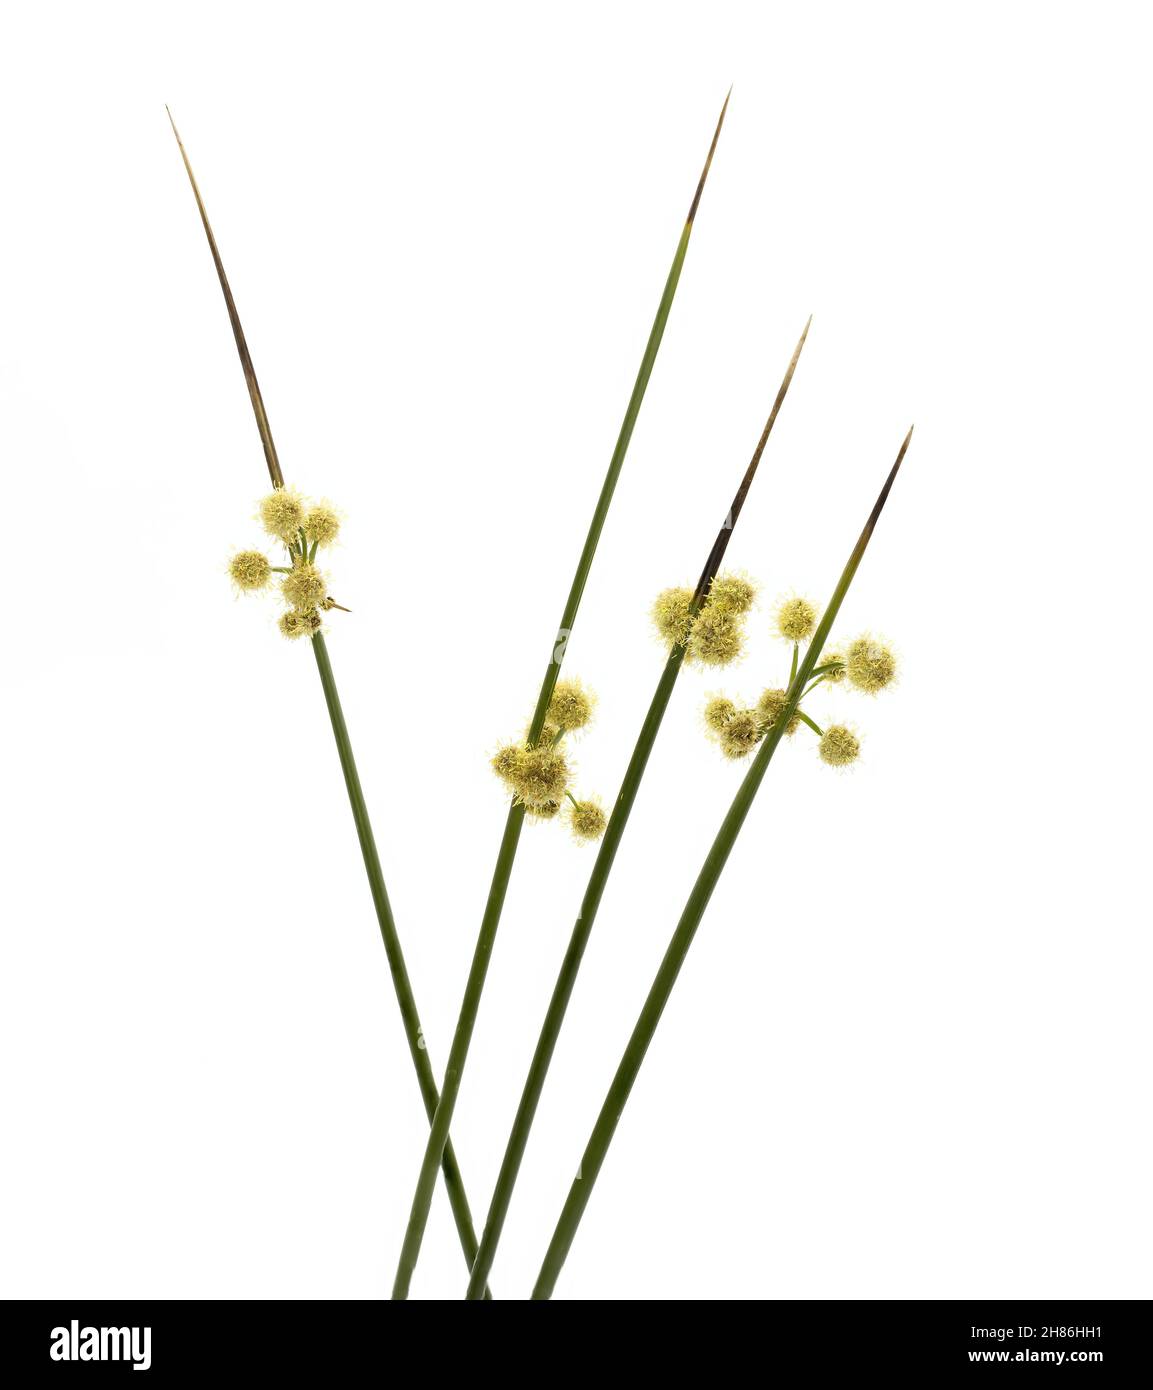 Scirpoides holoschoenus plant, Scirpoides holoschoenus, common name is roundhead bulrush, studio shot on white background Stock Photo